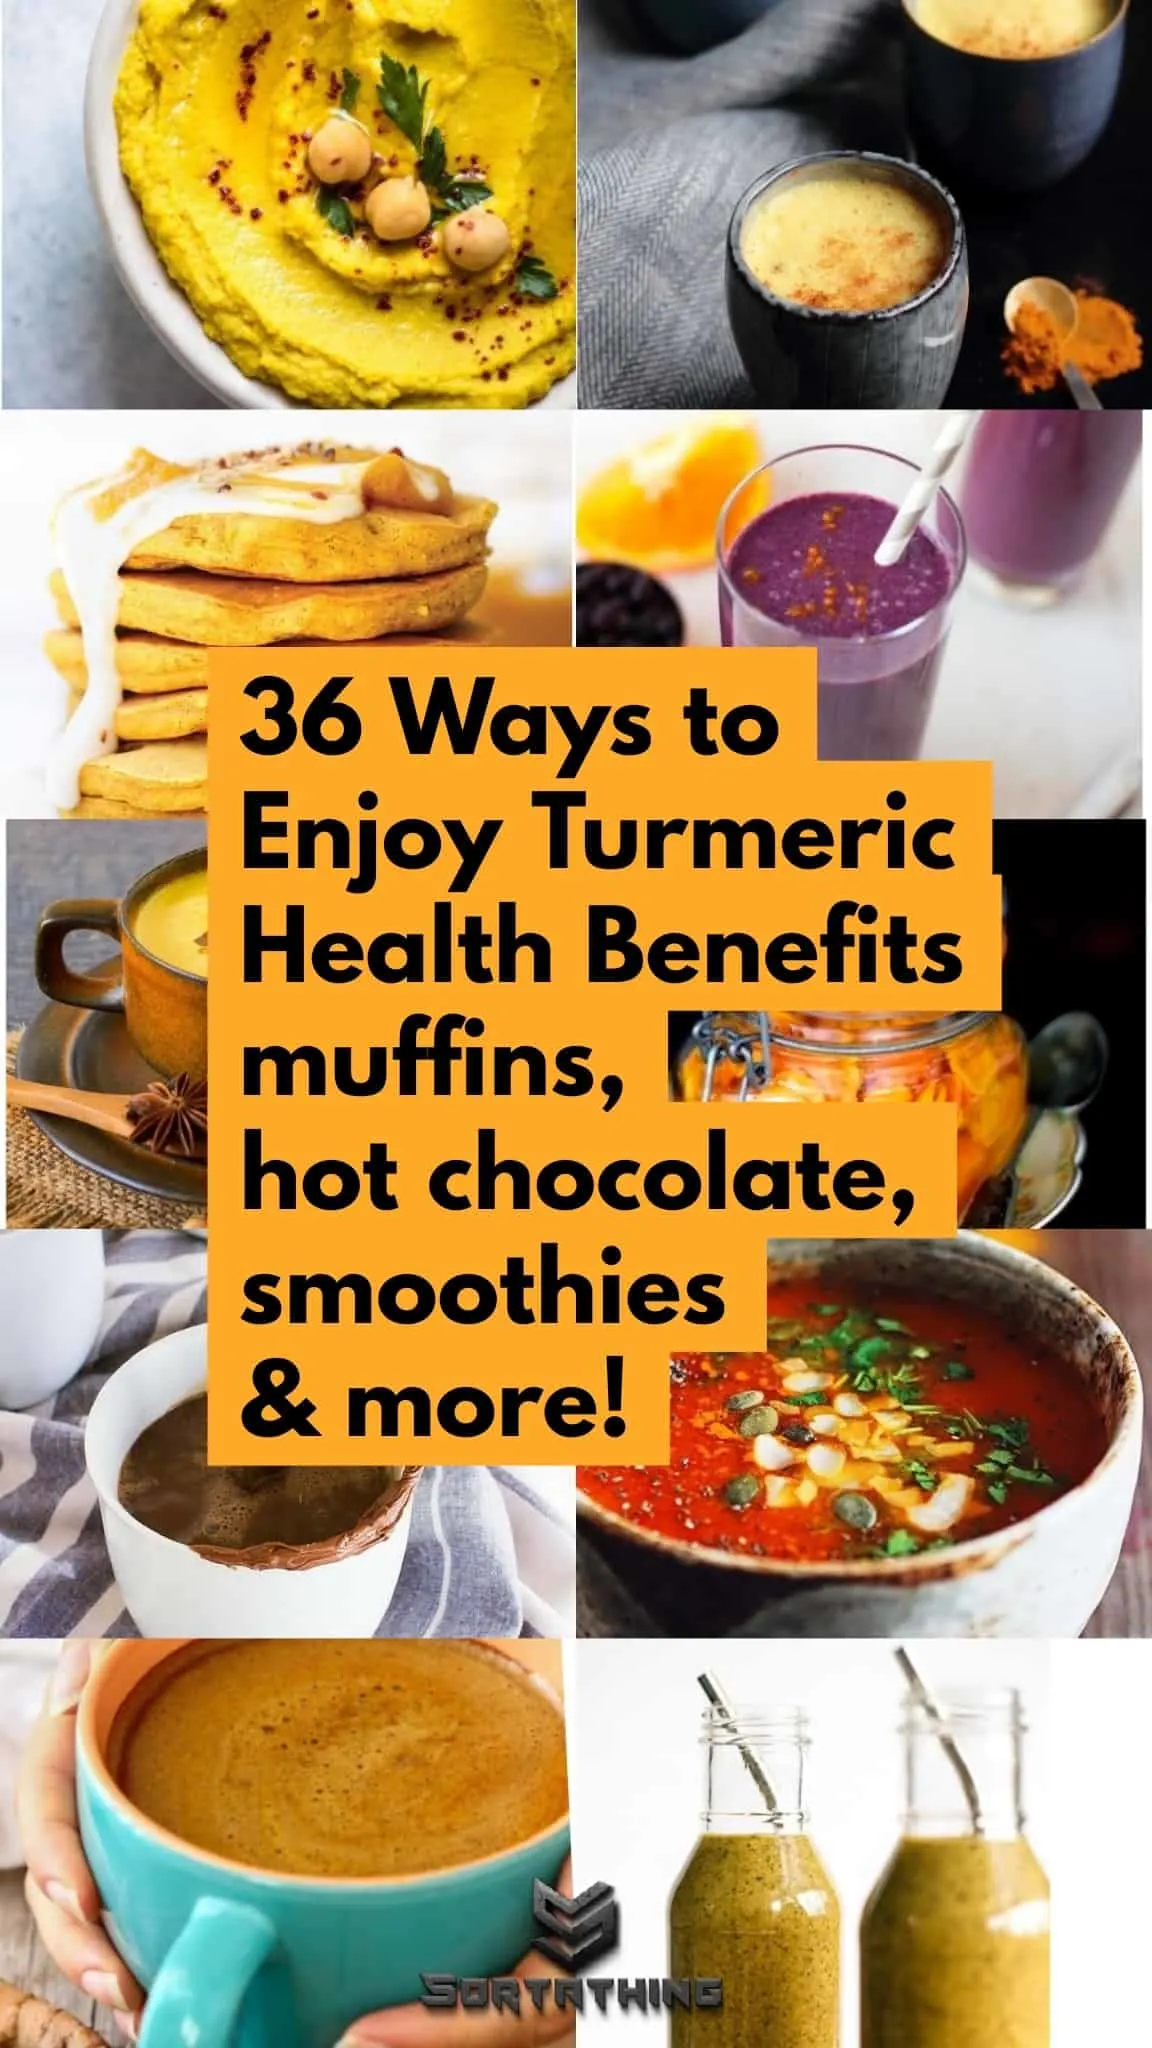 Turmeric Recipes - 36 Ways to Enjoy Turmeric Benefits